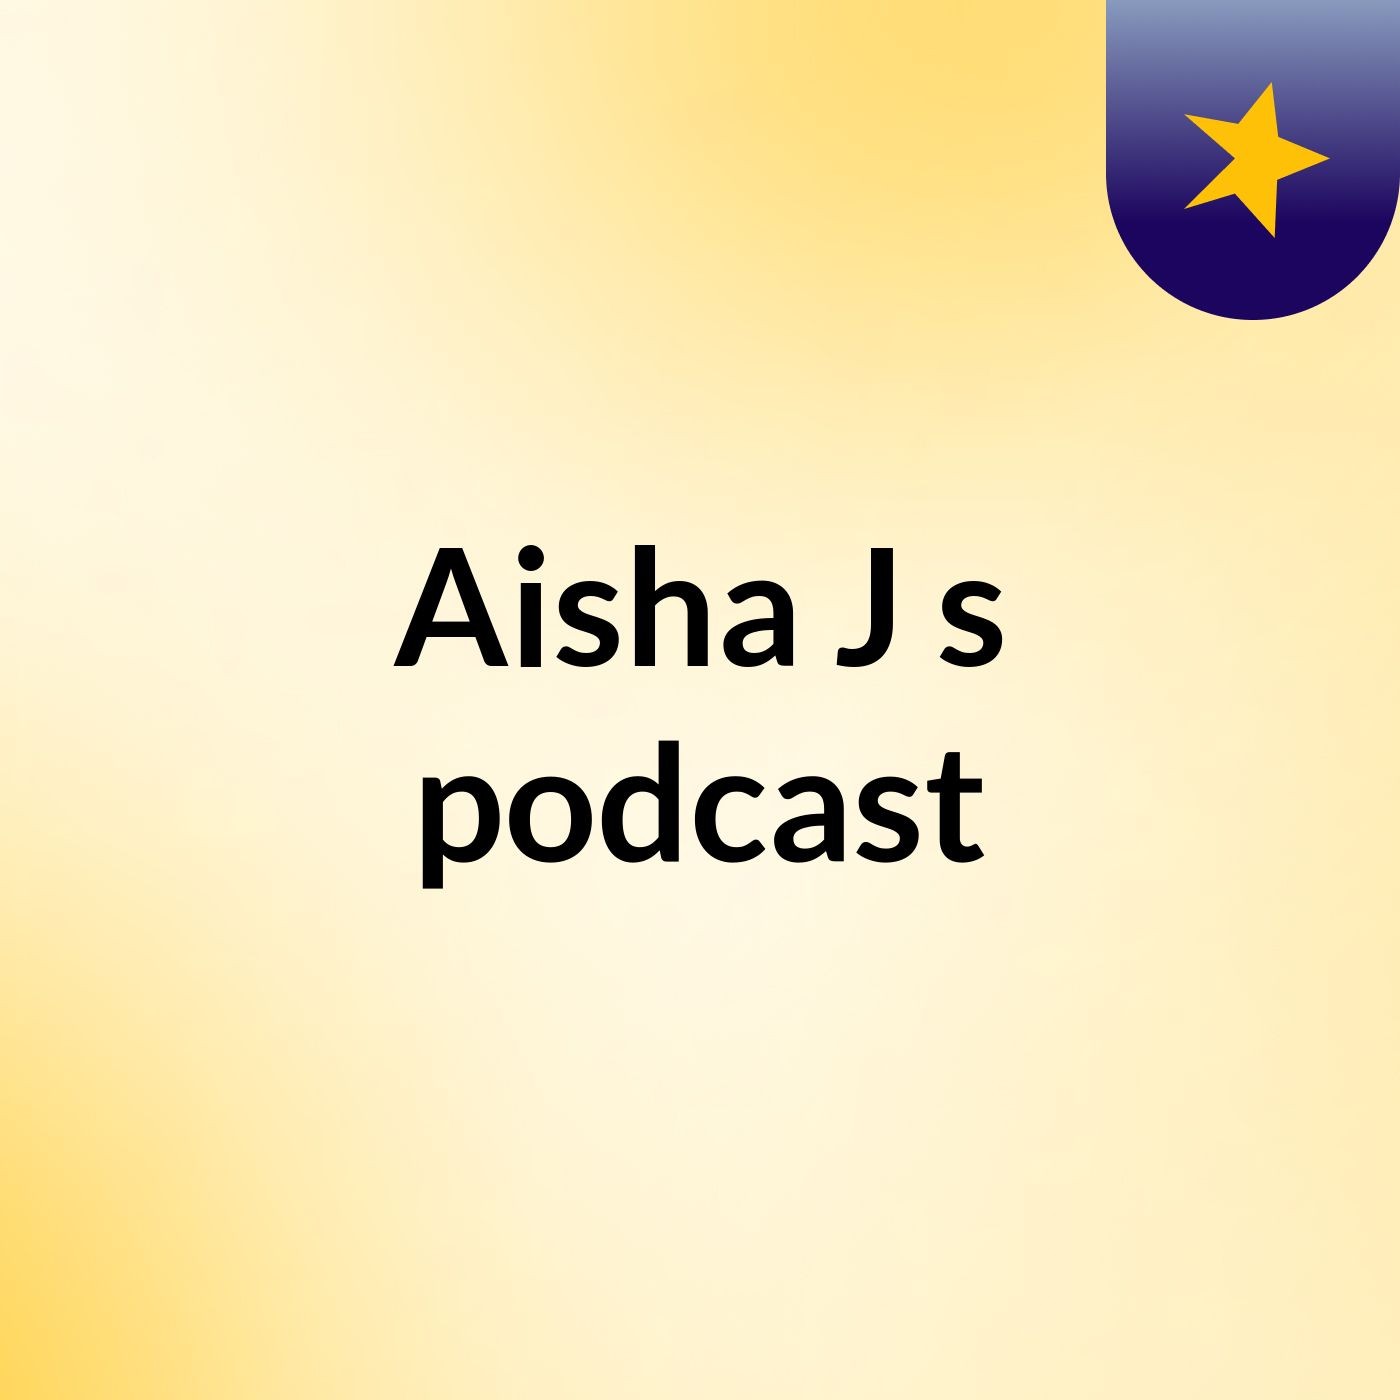 Aisha J's podcast